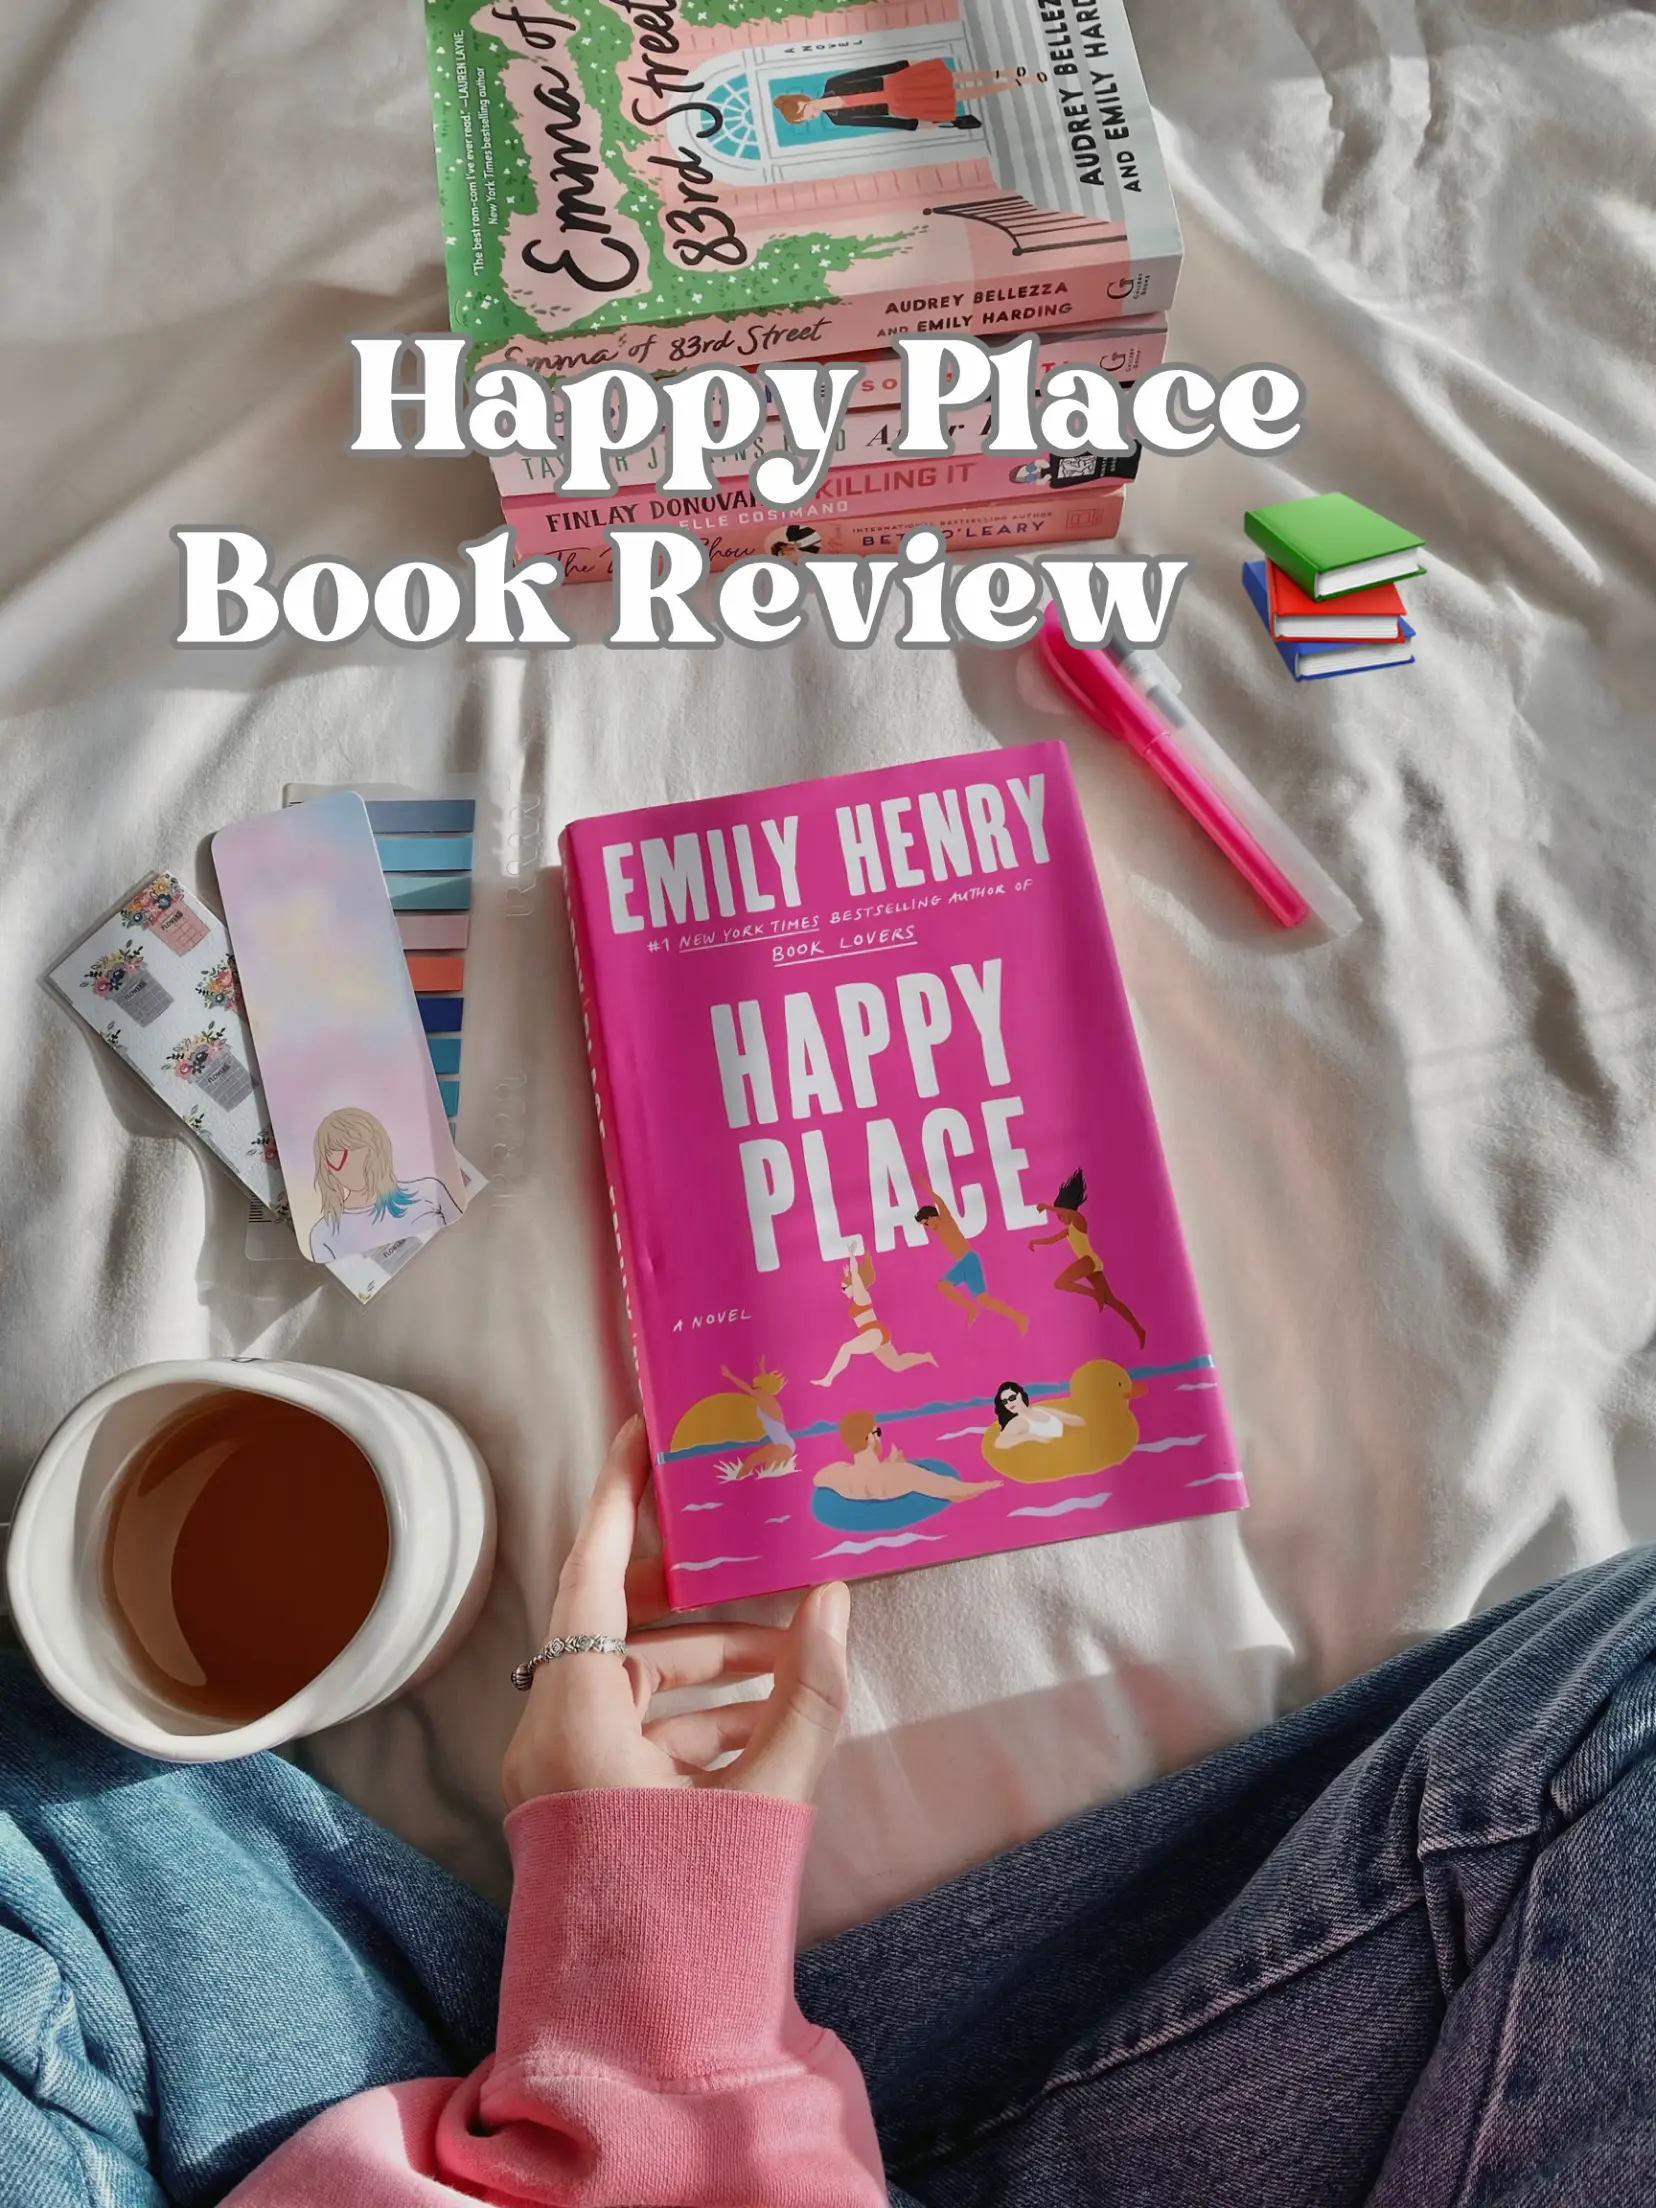 Happy place book - Lemon8 Search